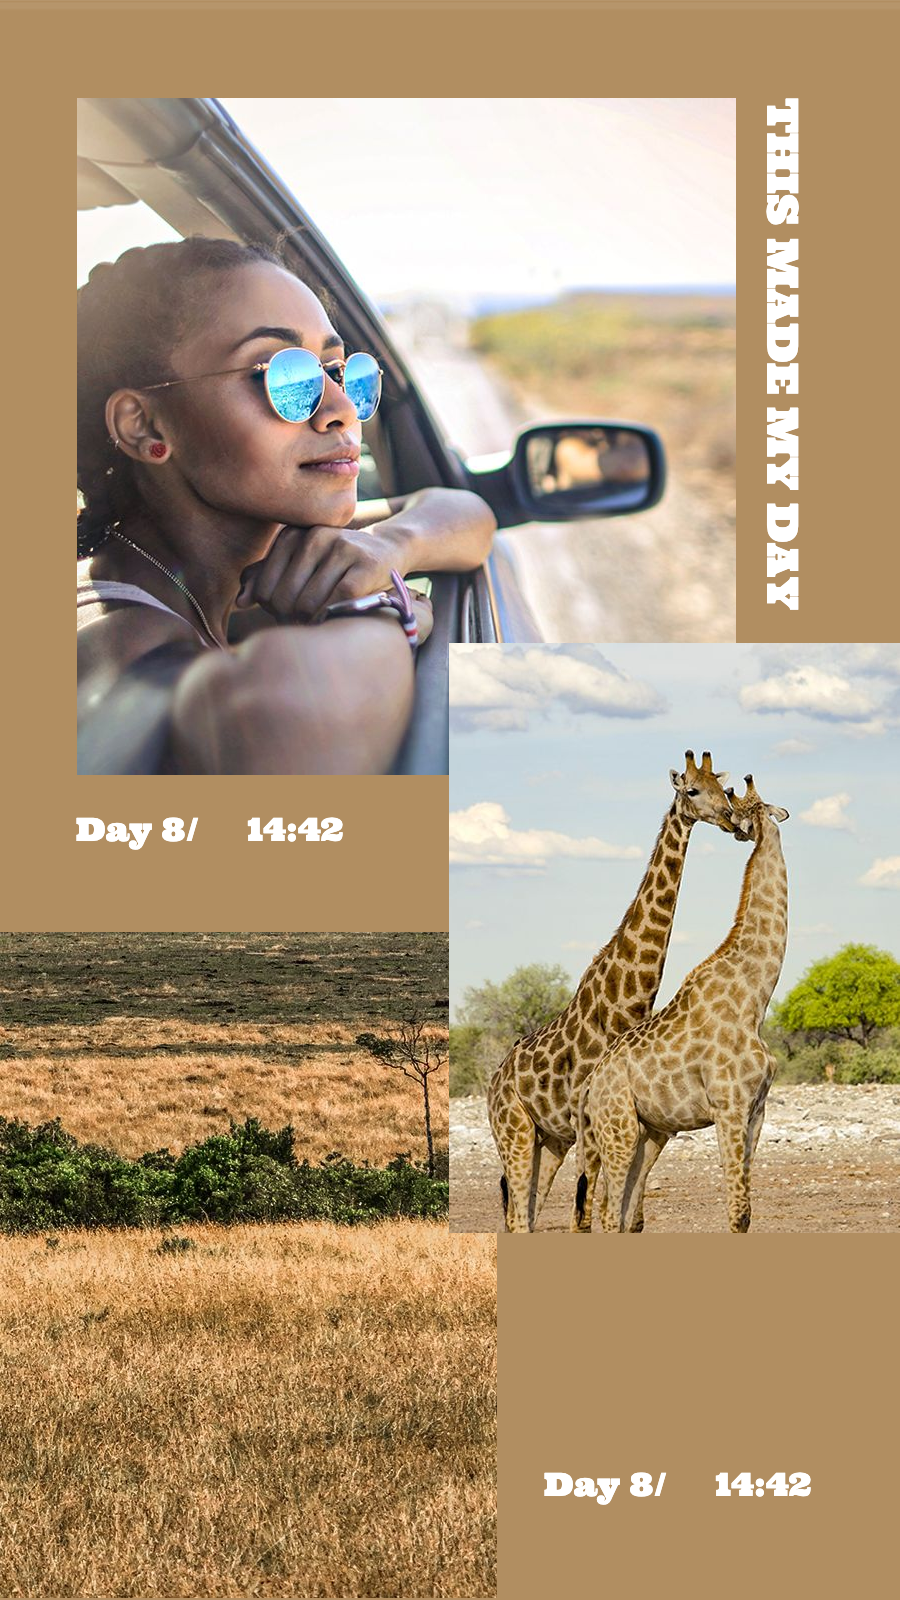 Grassland Safari Tourist Photo with Giraffes Instagram Story